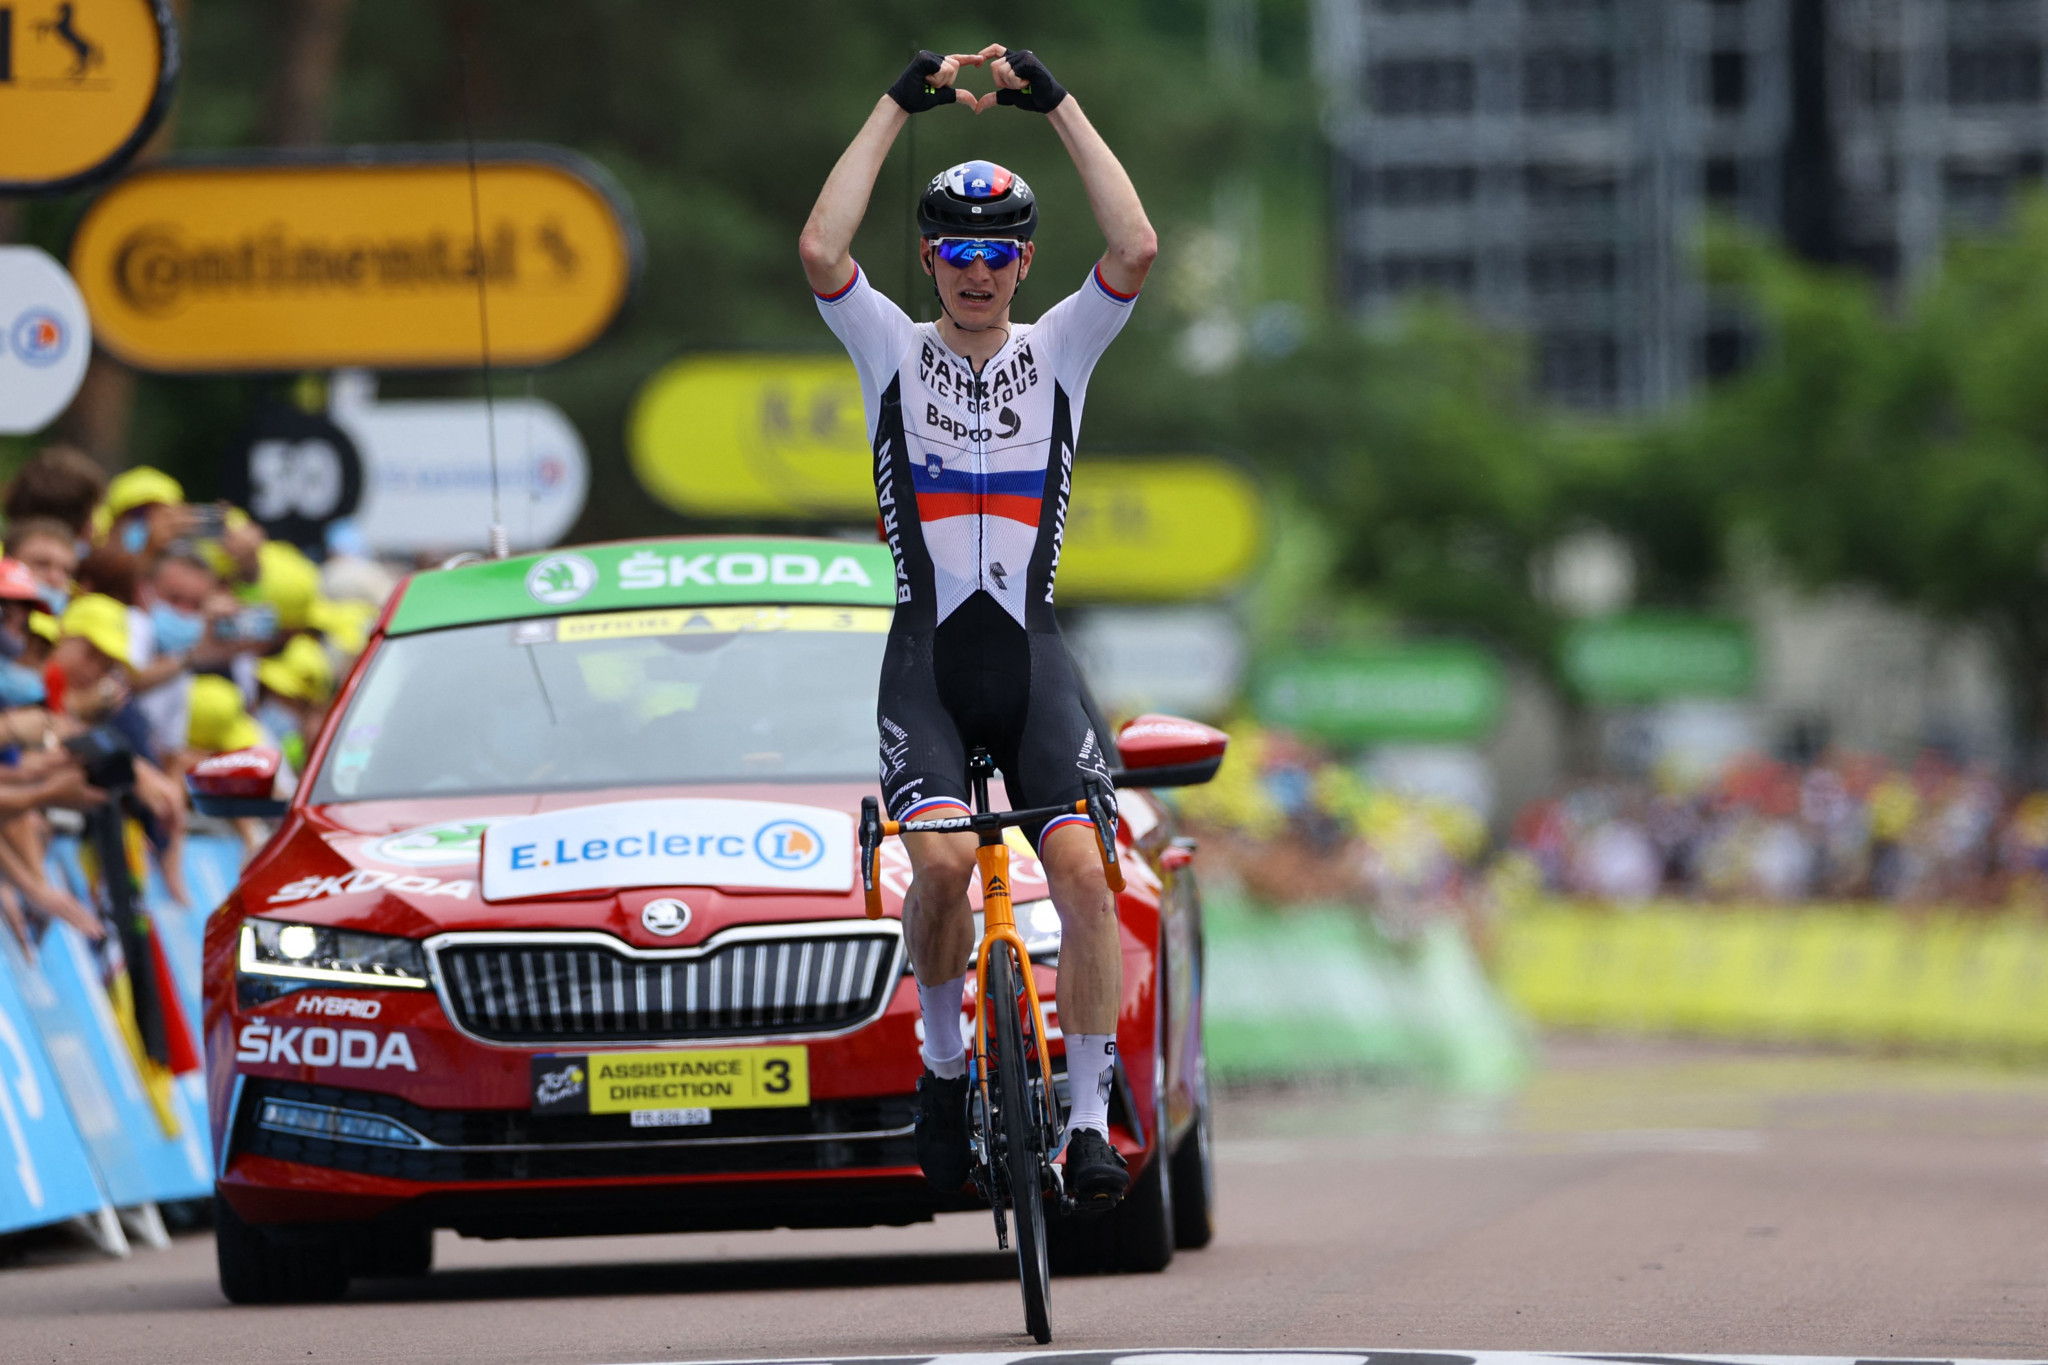 Mohorič endurance rewarded with stage win at Tour de France